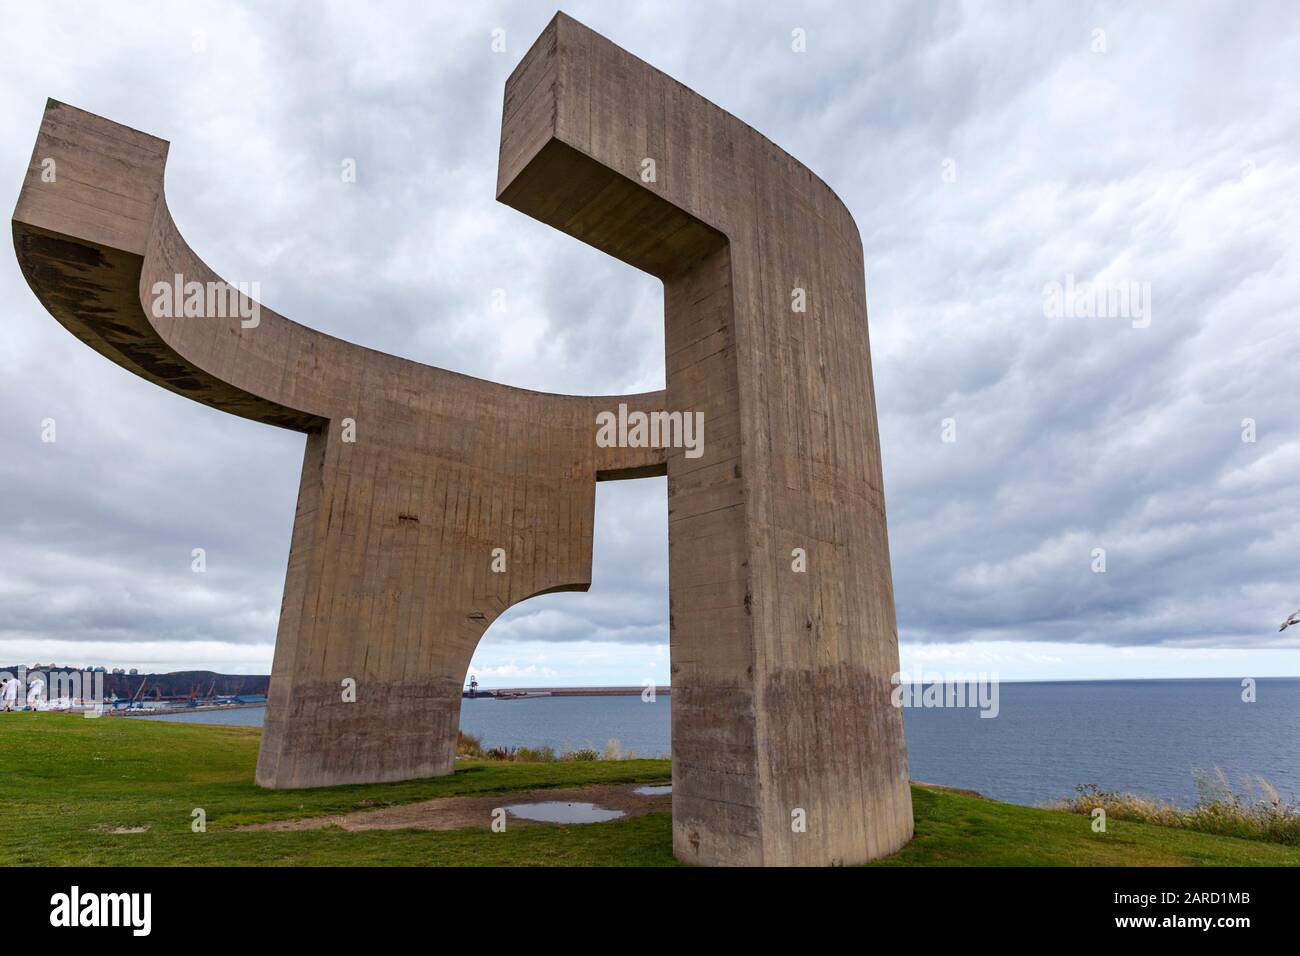 Elogio del Horizonte,  sea-facing concrete sculpture by Basque artist Eduardo Chillida, Gijon, Asturias, Spain Stock Photo